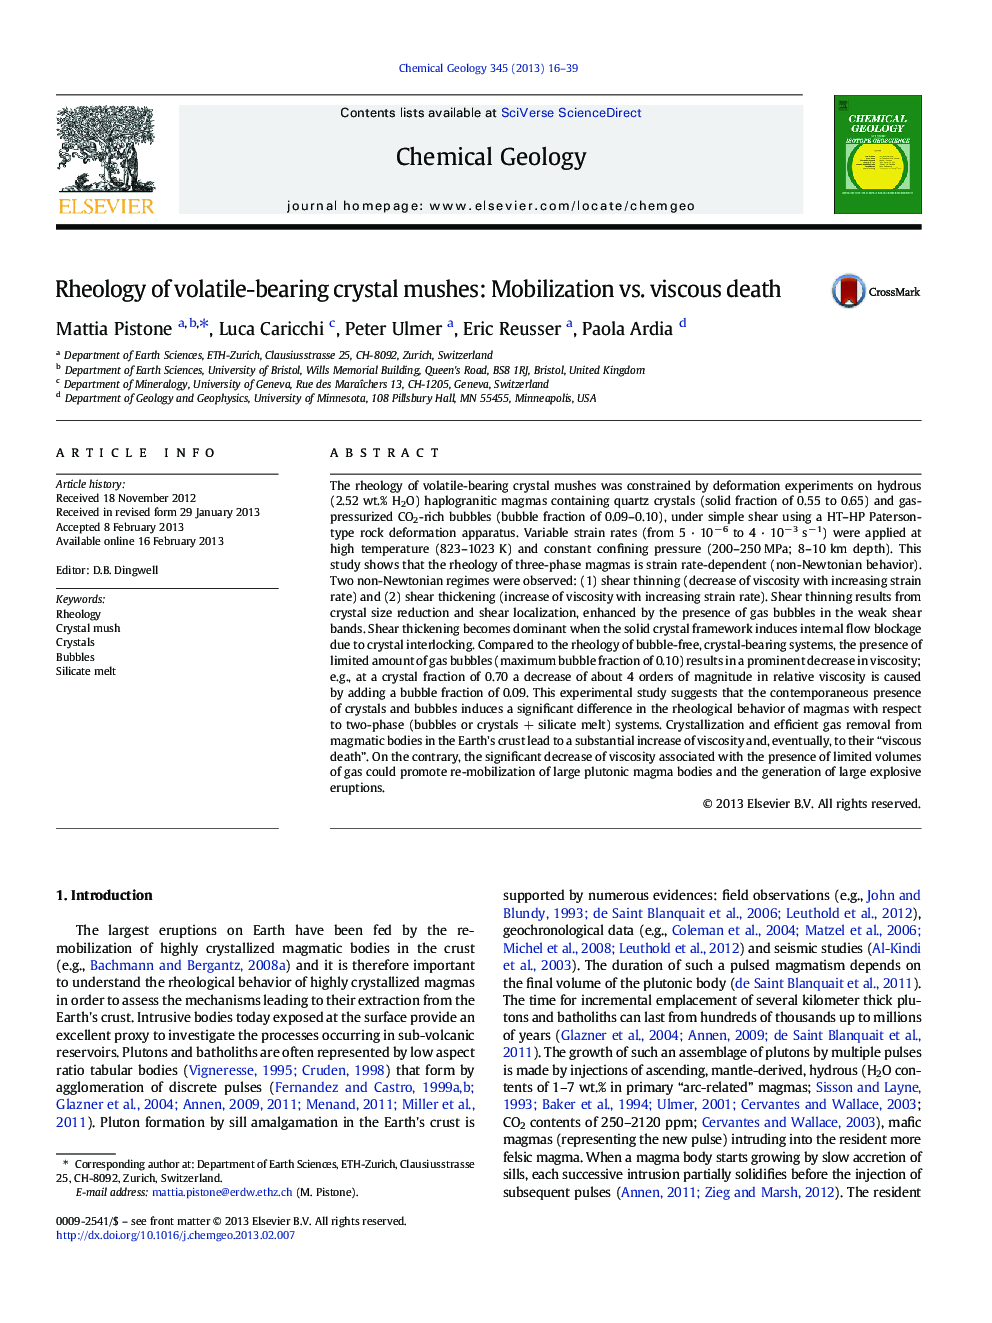 Rheology of volatile-bearing crystal mushes: Mobilization vs. viscous death